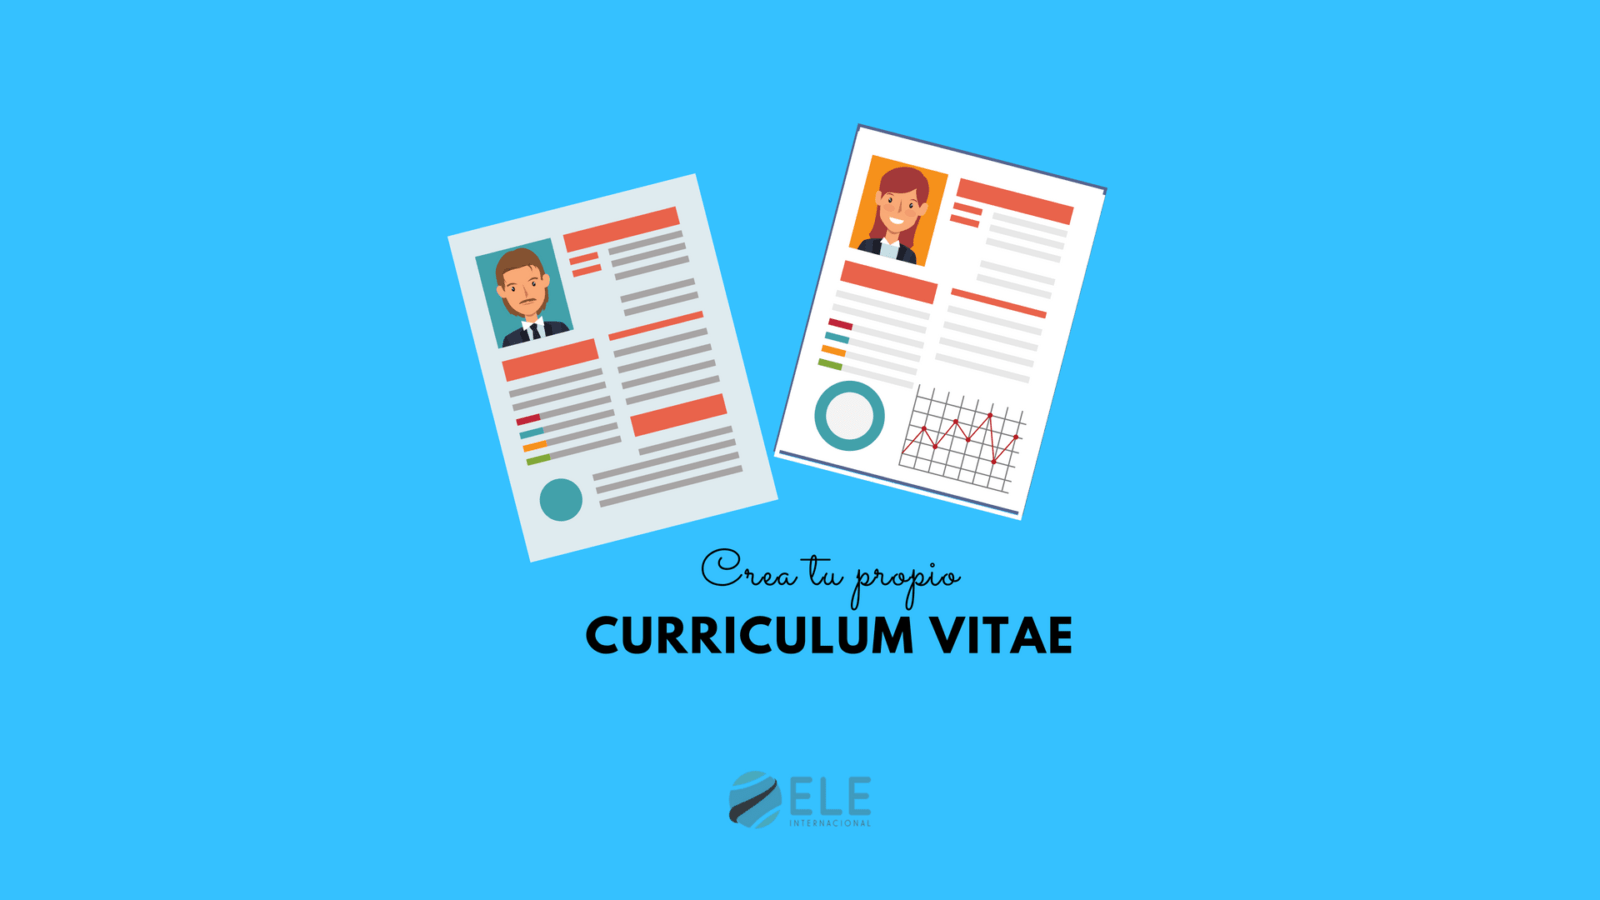 Crea tu propio Curriculum Vitae. Ficha para hacer tu propio curriculum en clase de ELE. #spanishteacher #jobs